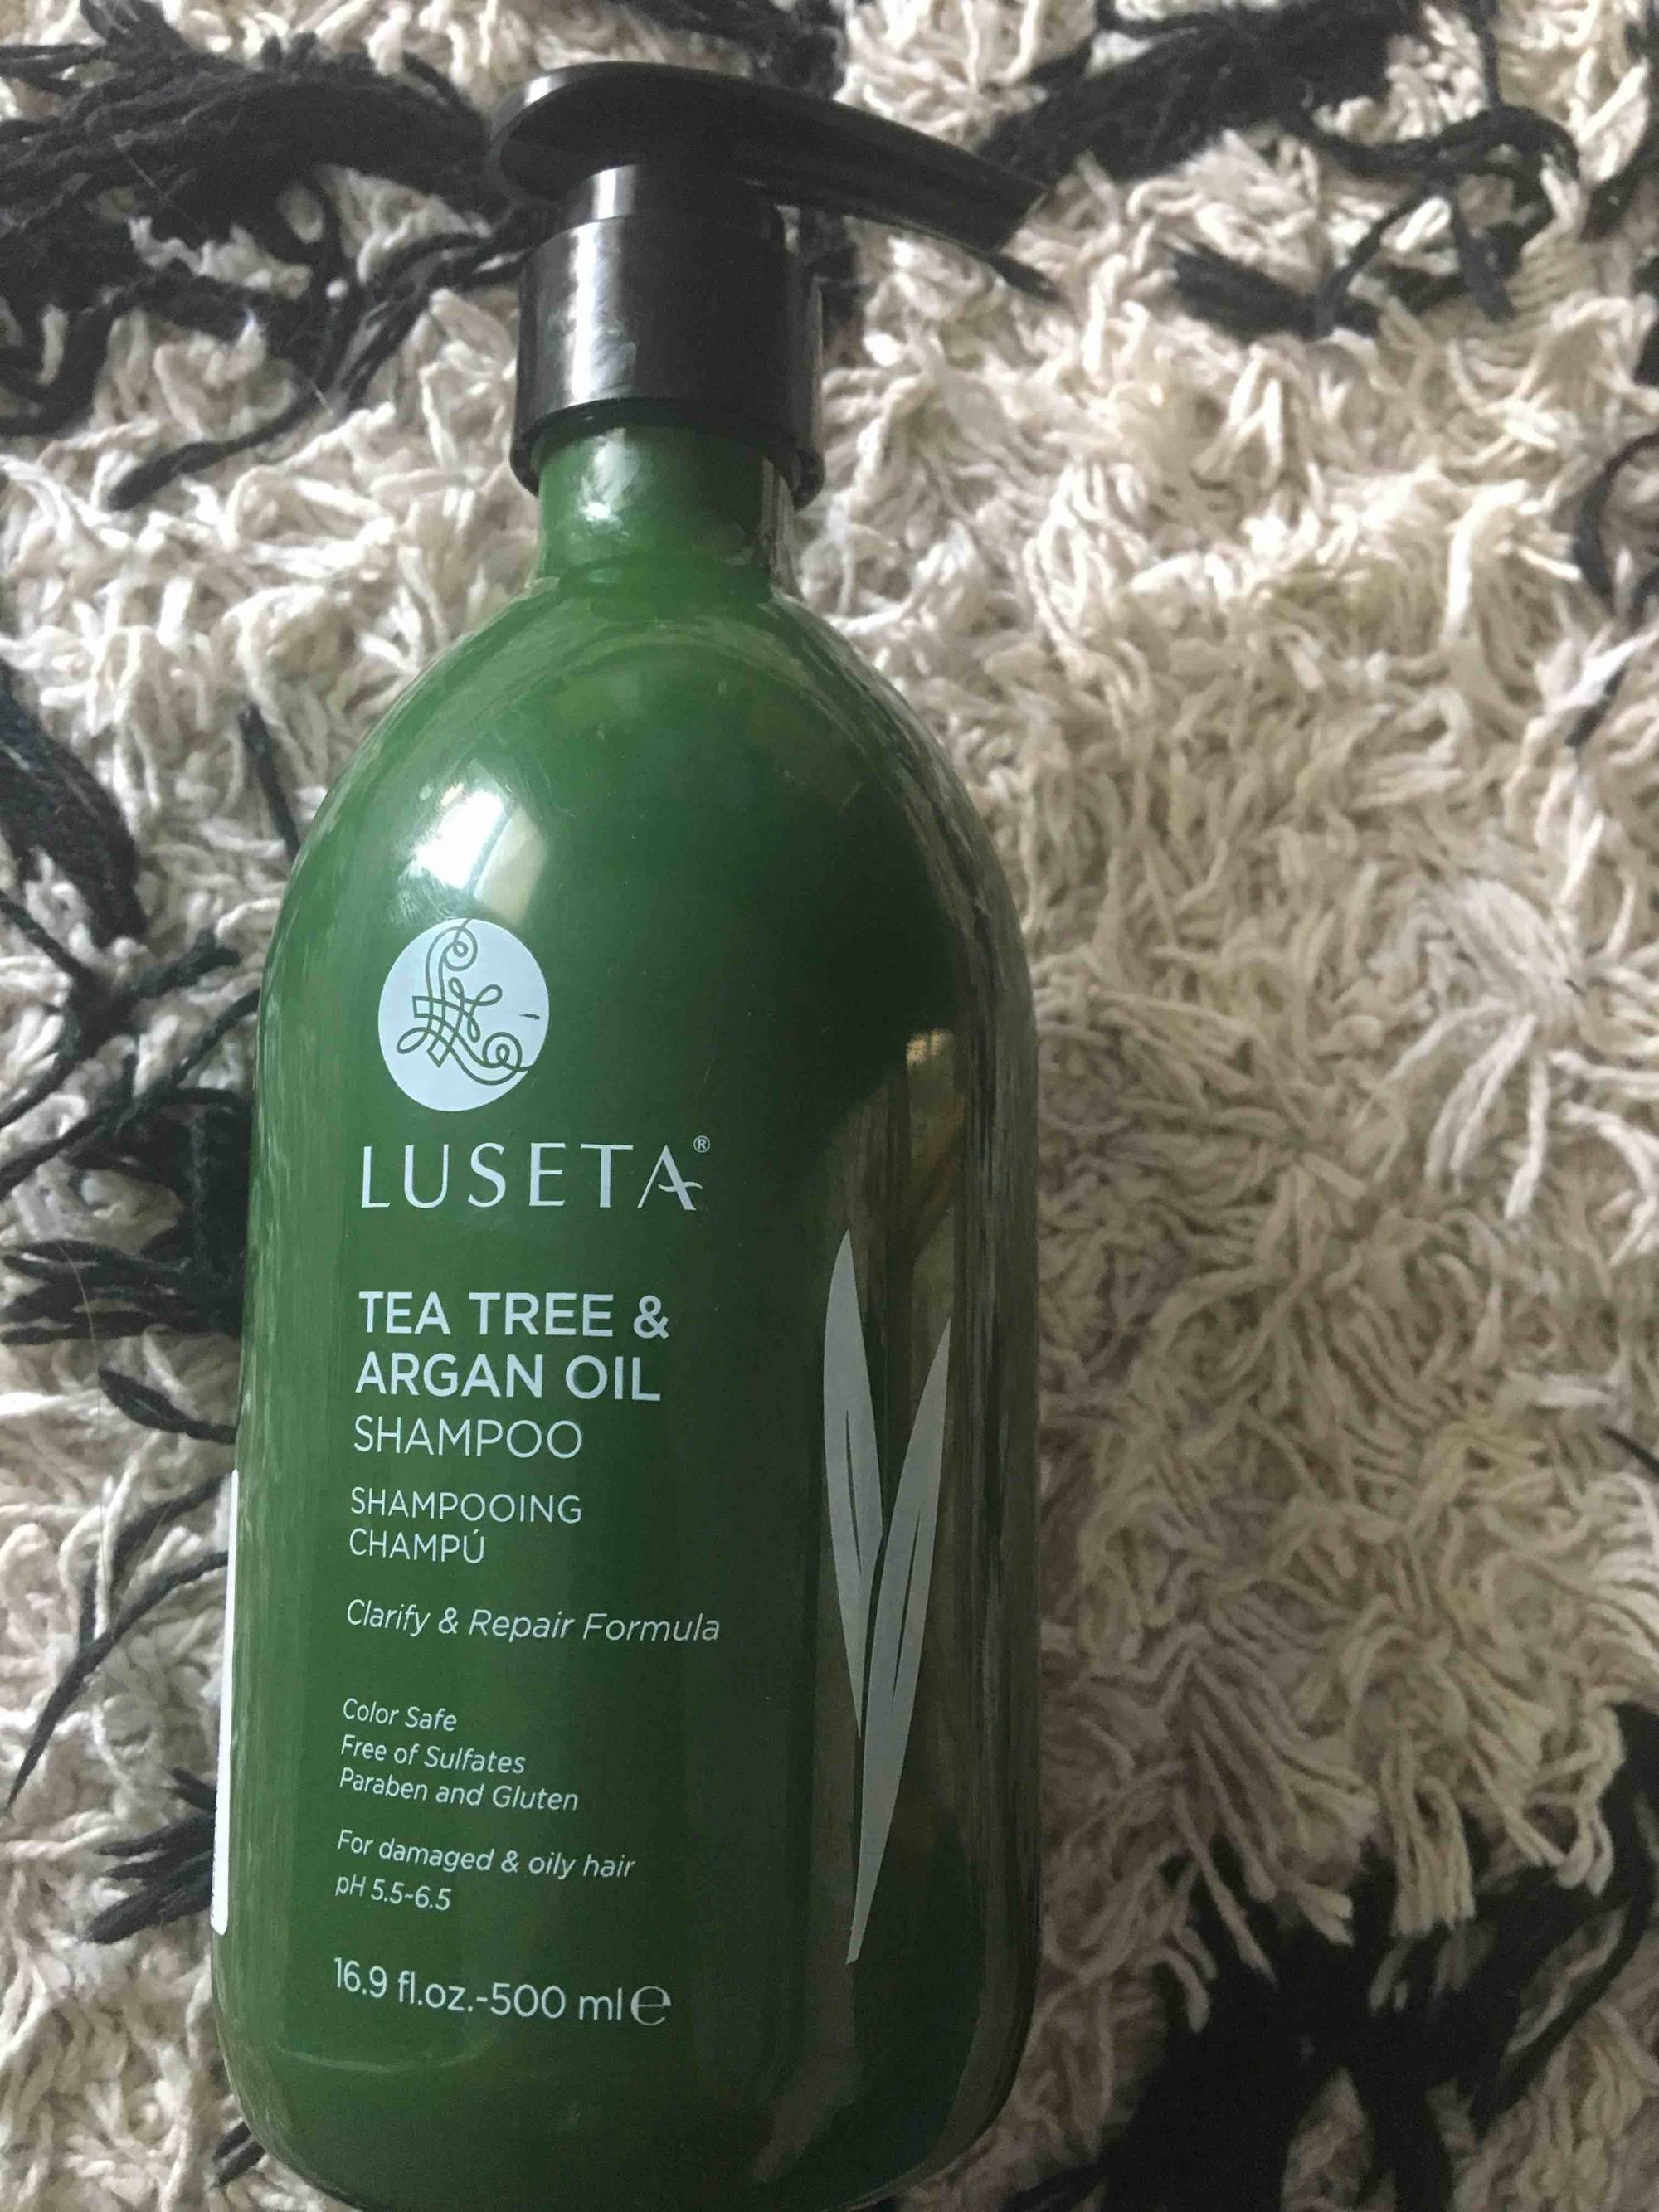 LUSETA - Tea tree & argan oil - Shampoo